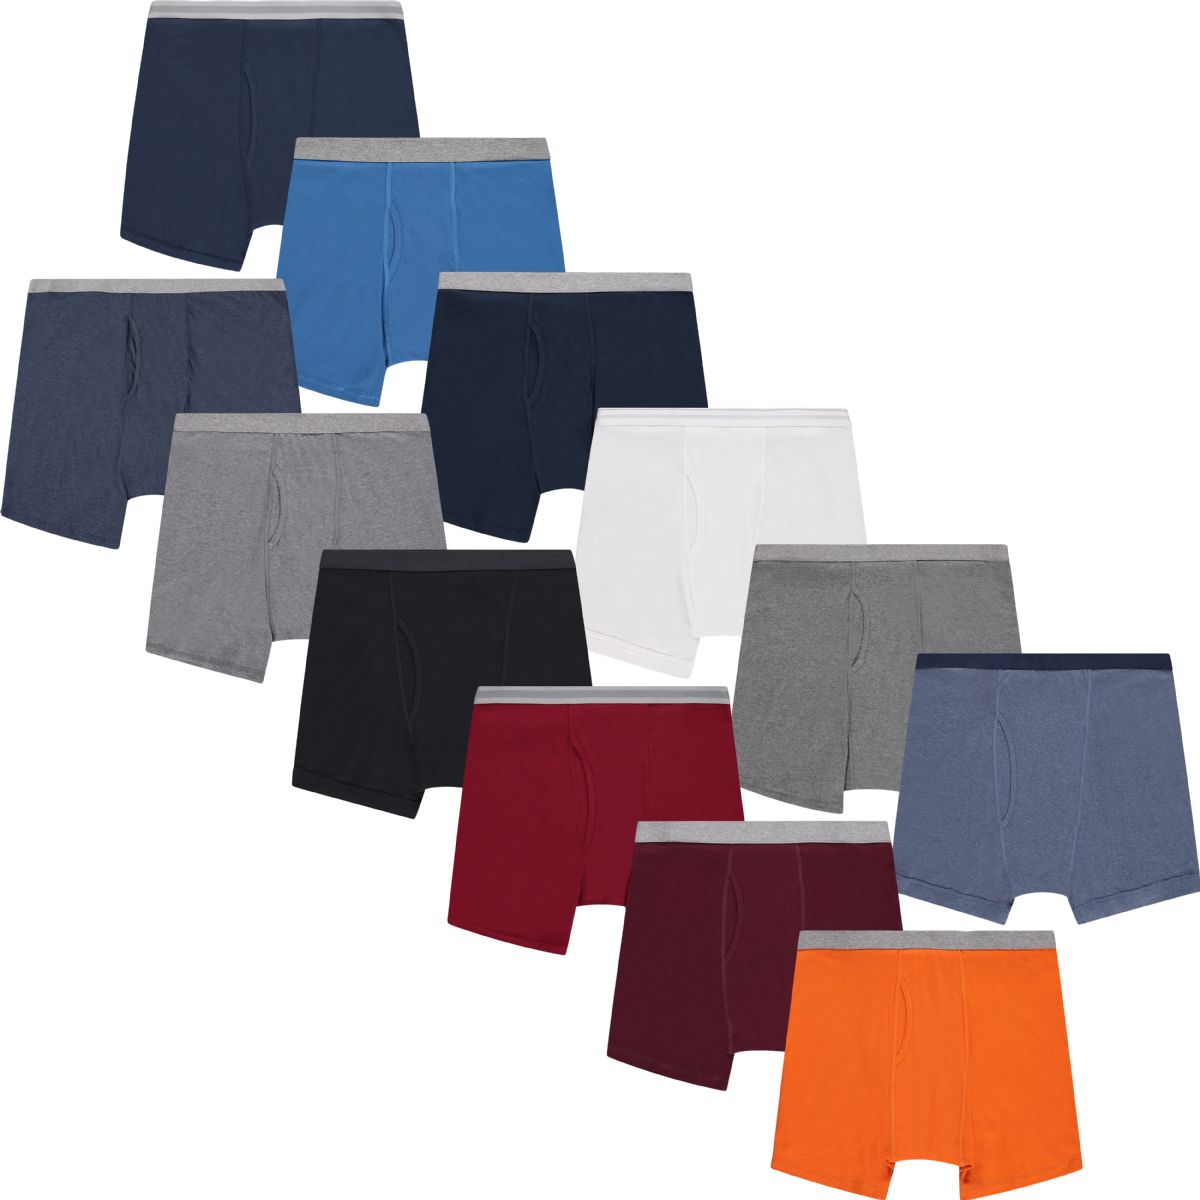 144 Wholesale Mens Imperfect Wholesale Gildan Boxer Briefs, Assorted Sizes And Colors